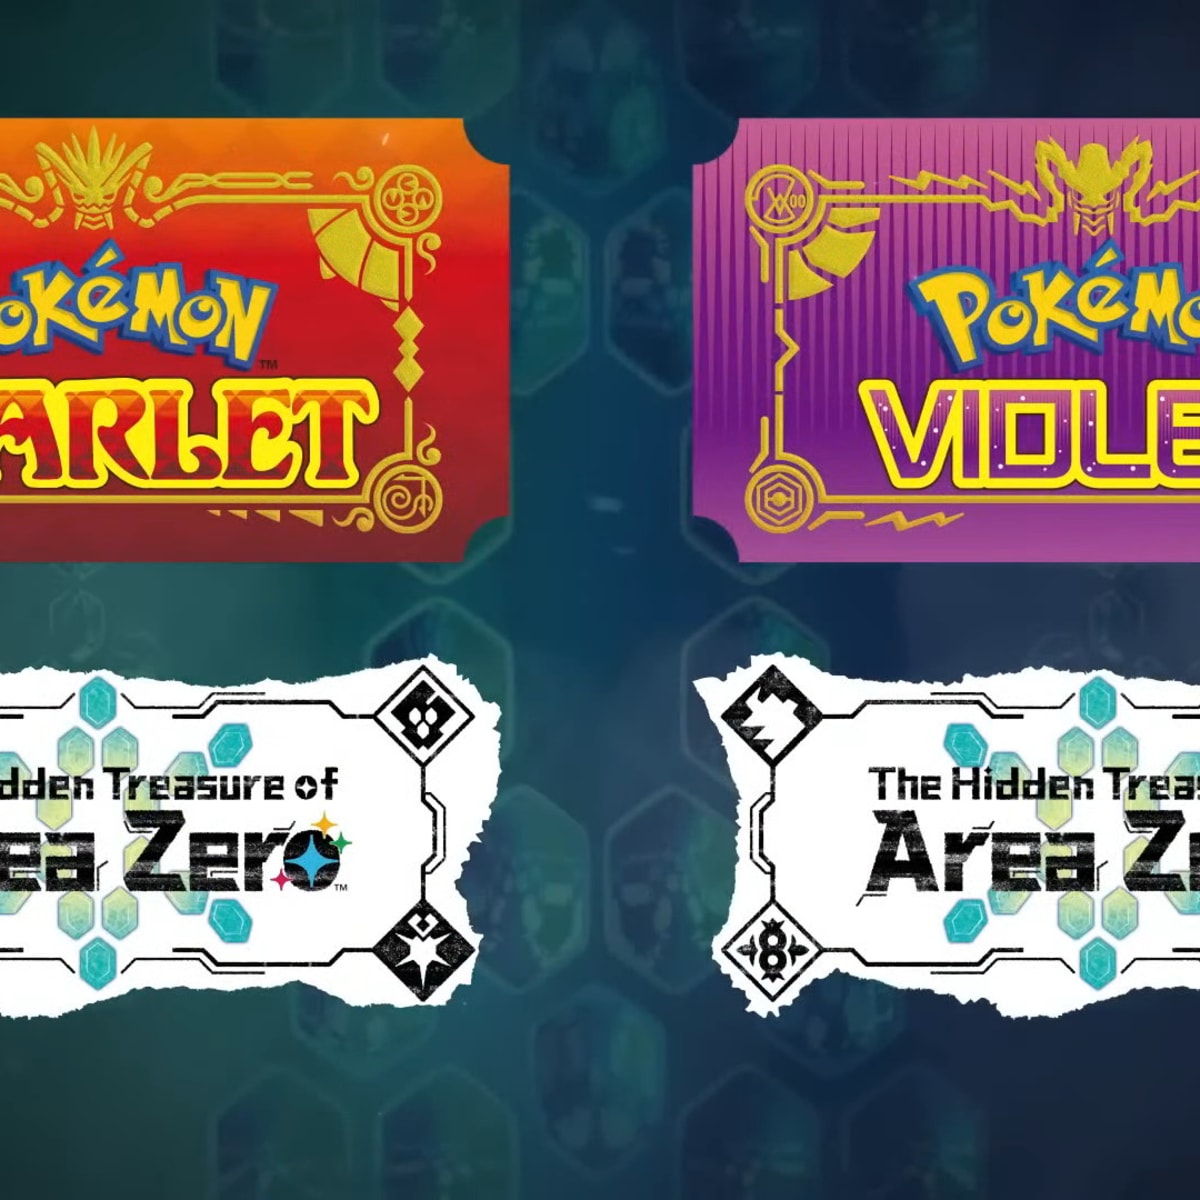 Pokémon Scarlet & Violet DLC The Hidden Treasure of Area Zero revealed -  Video Games on Sports Illustrated